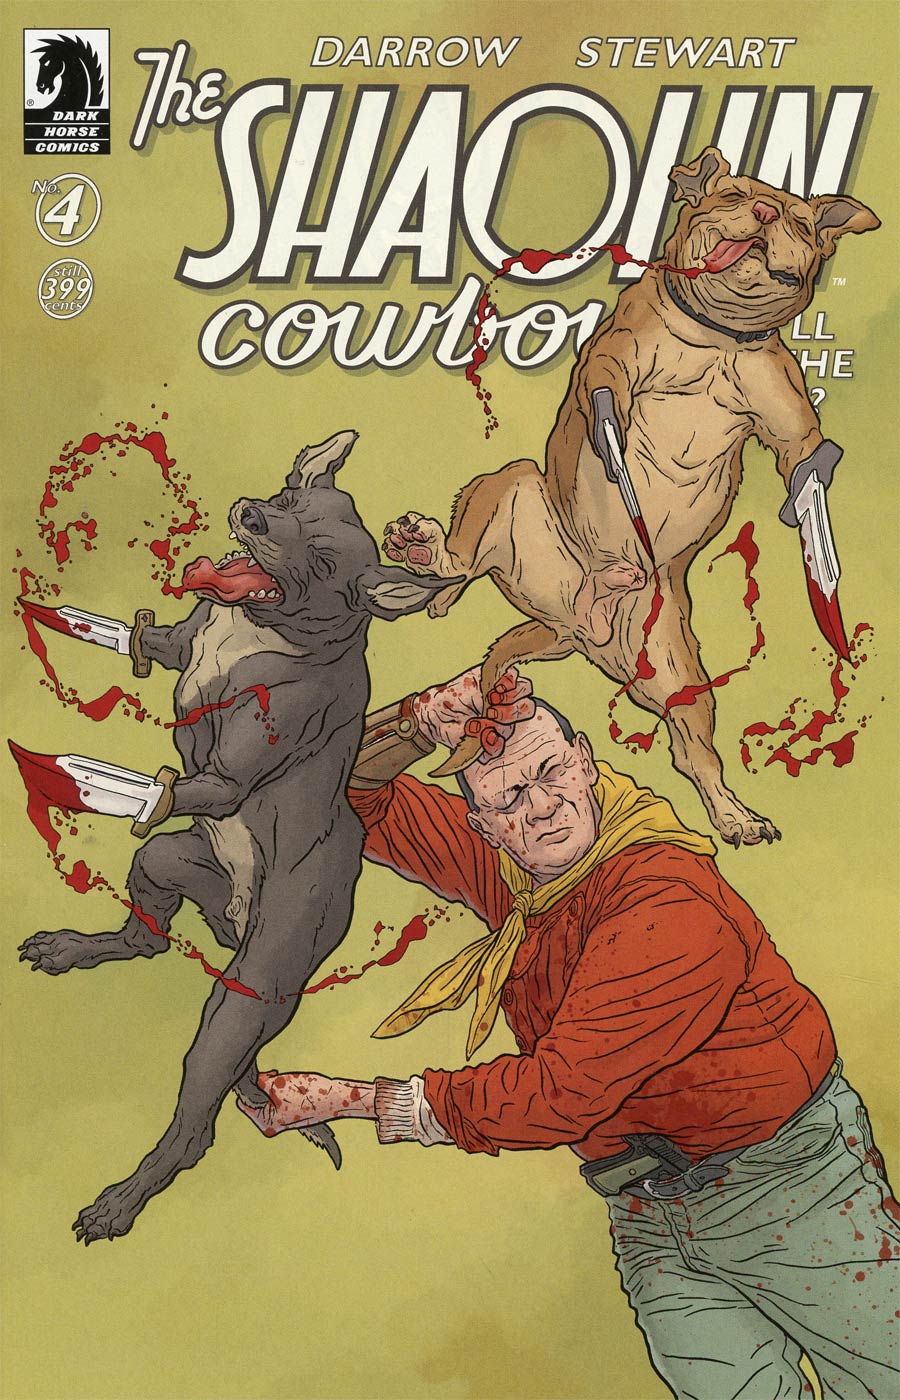 Shaolin Cowboy Wholl Stop The Reign #4 Cover A Regular Geof Darrow Cover